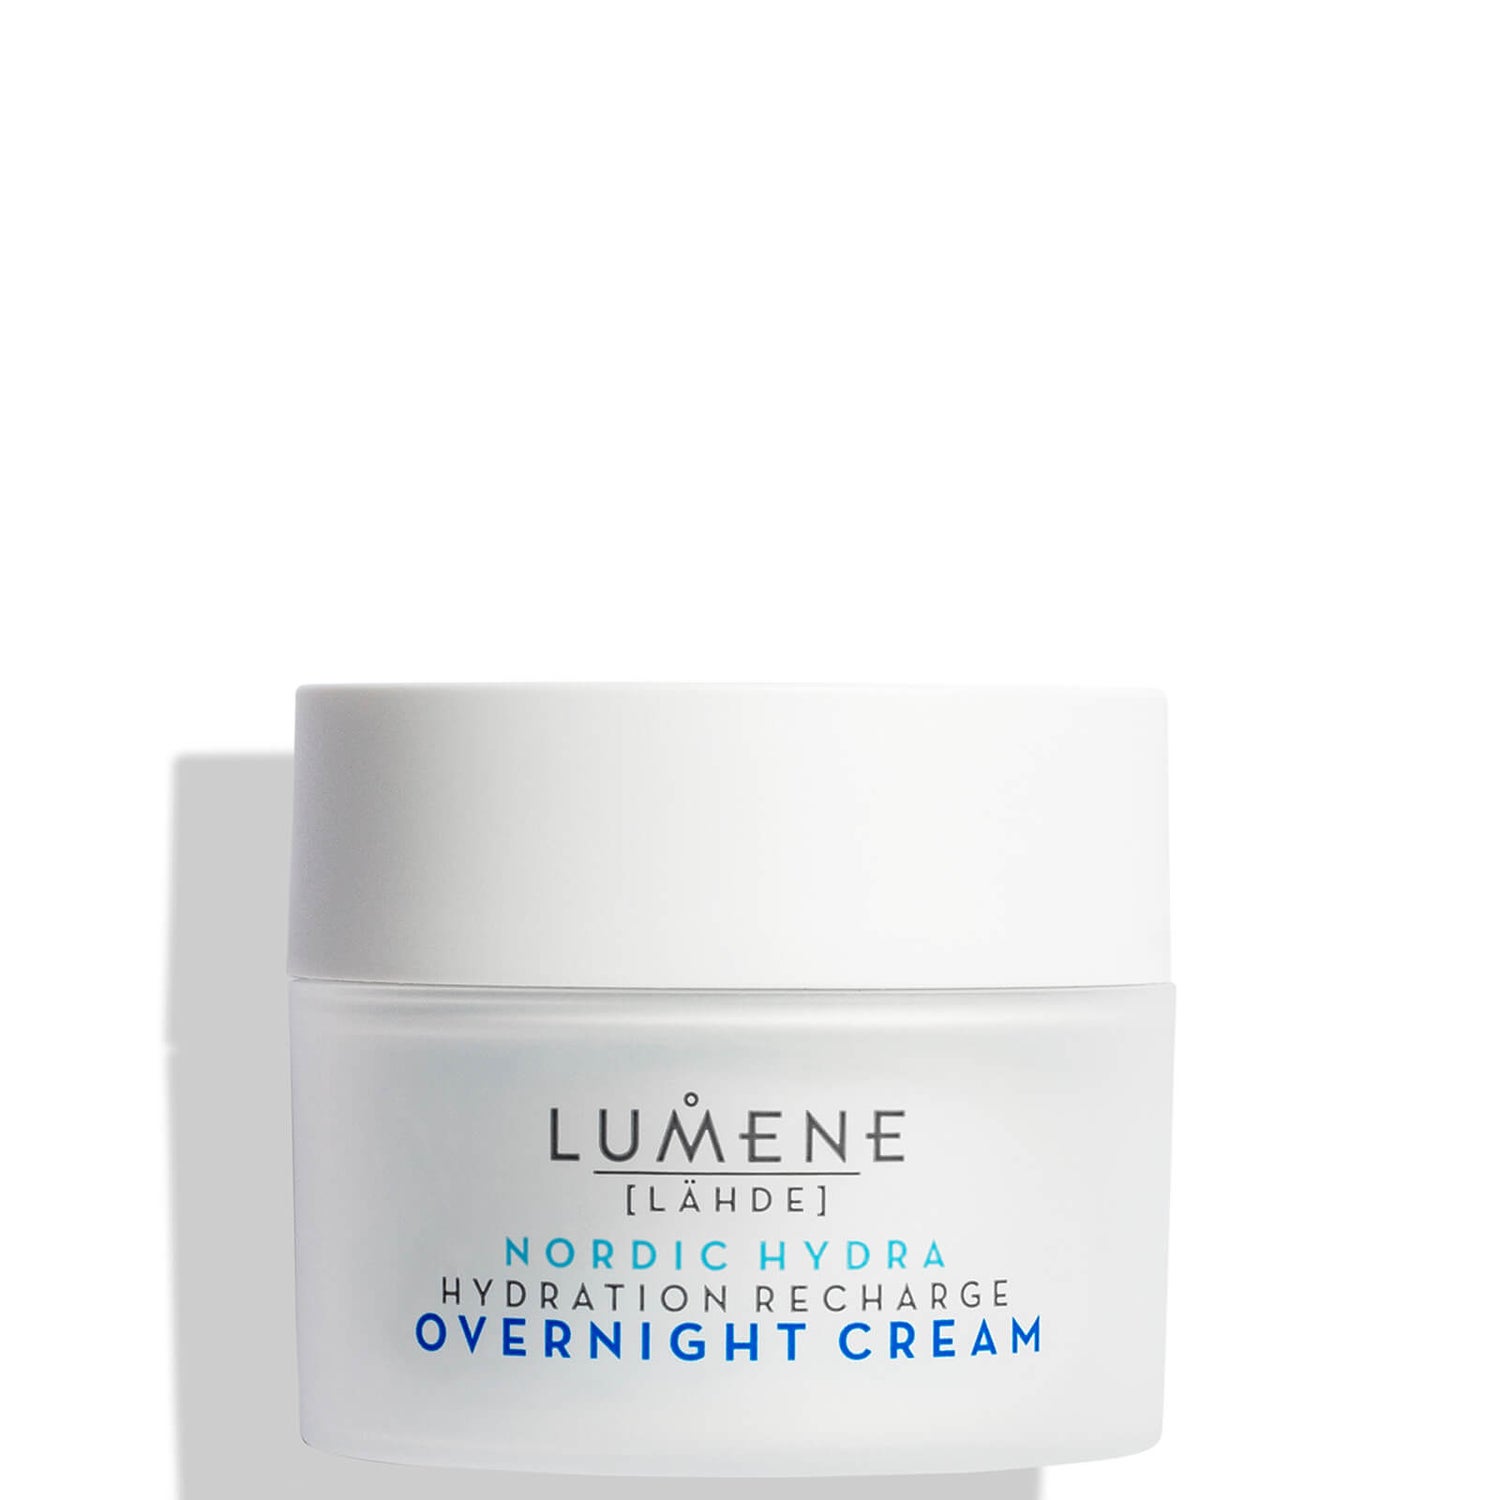 Ночной увлажняющий восстанавливающий крем Lumene Nordic Hydra [Lähde] Hydration Recharge Overnight Cream 50 мл